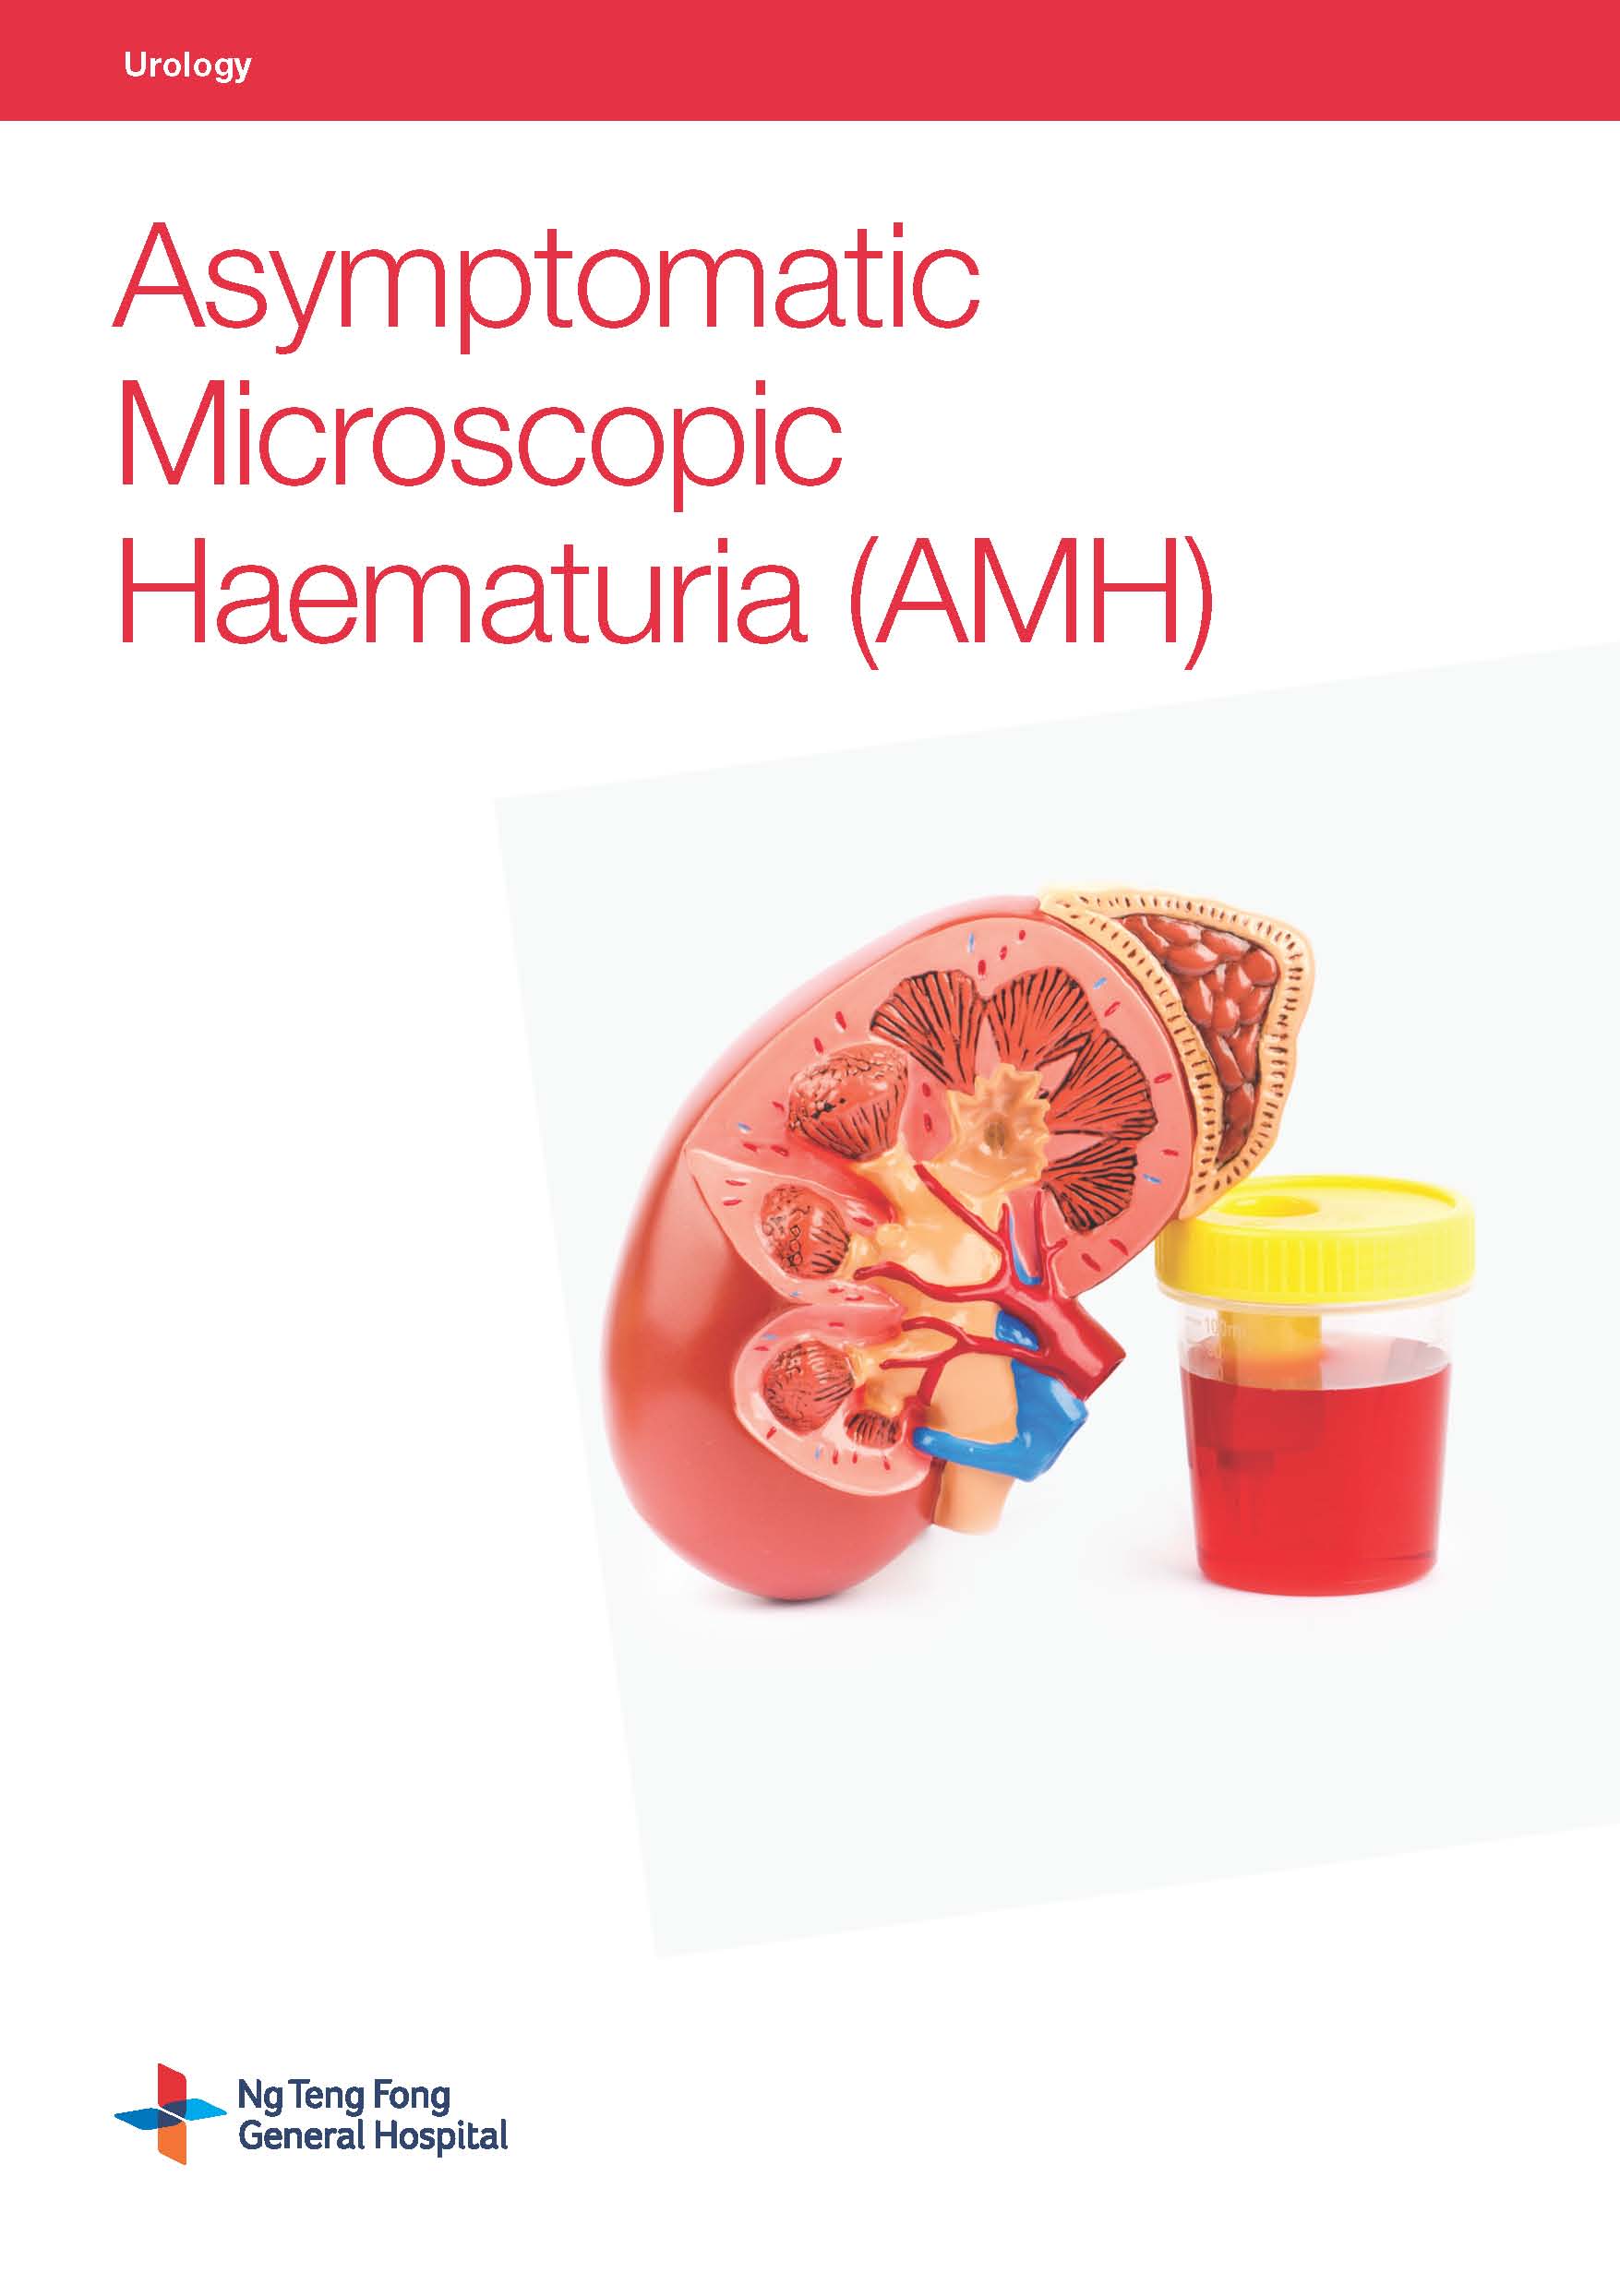 Asymptomatic Microscopic Haematria (AMH)